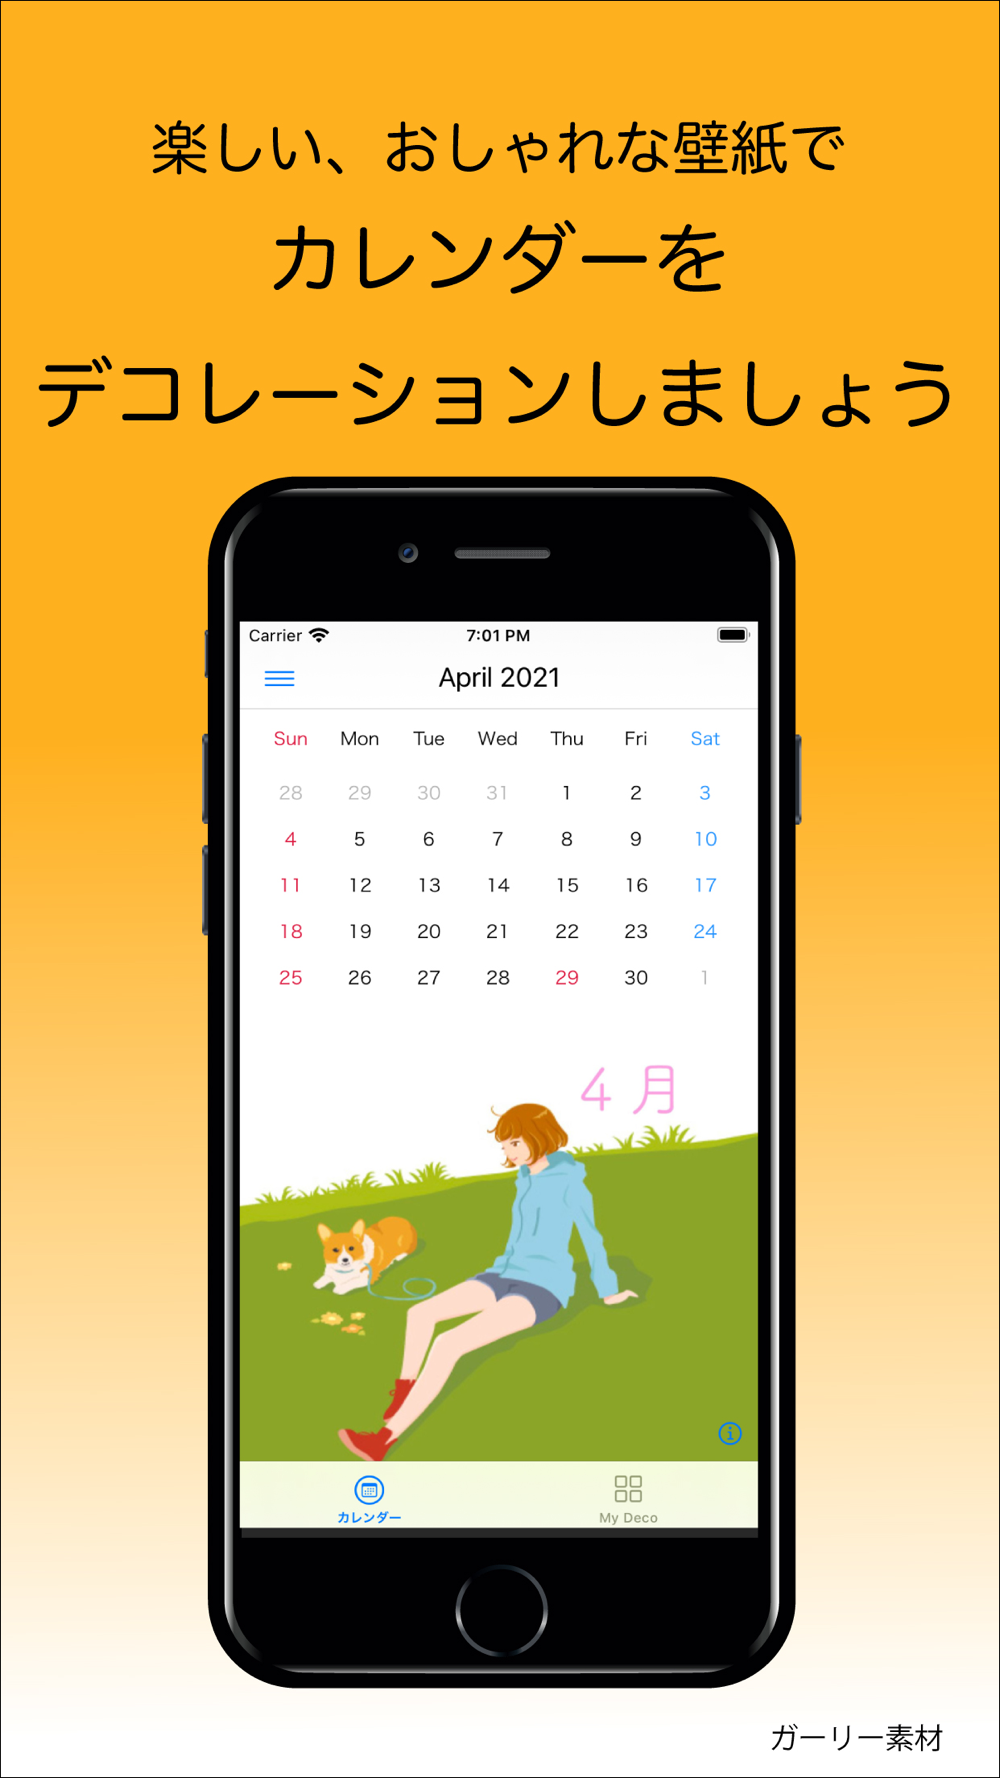 Deco カレンダー 壁紙カレンダーアプリ Free Download App For Iphone Steprimo Com